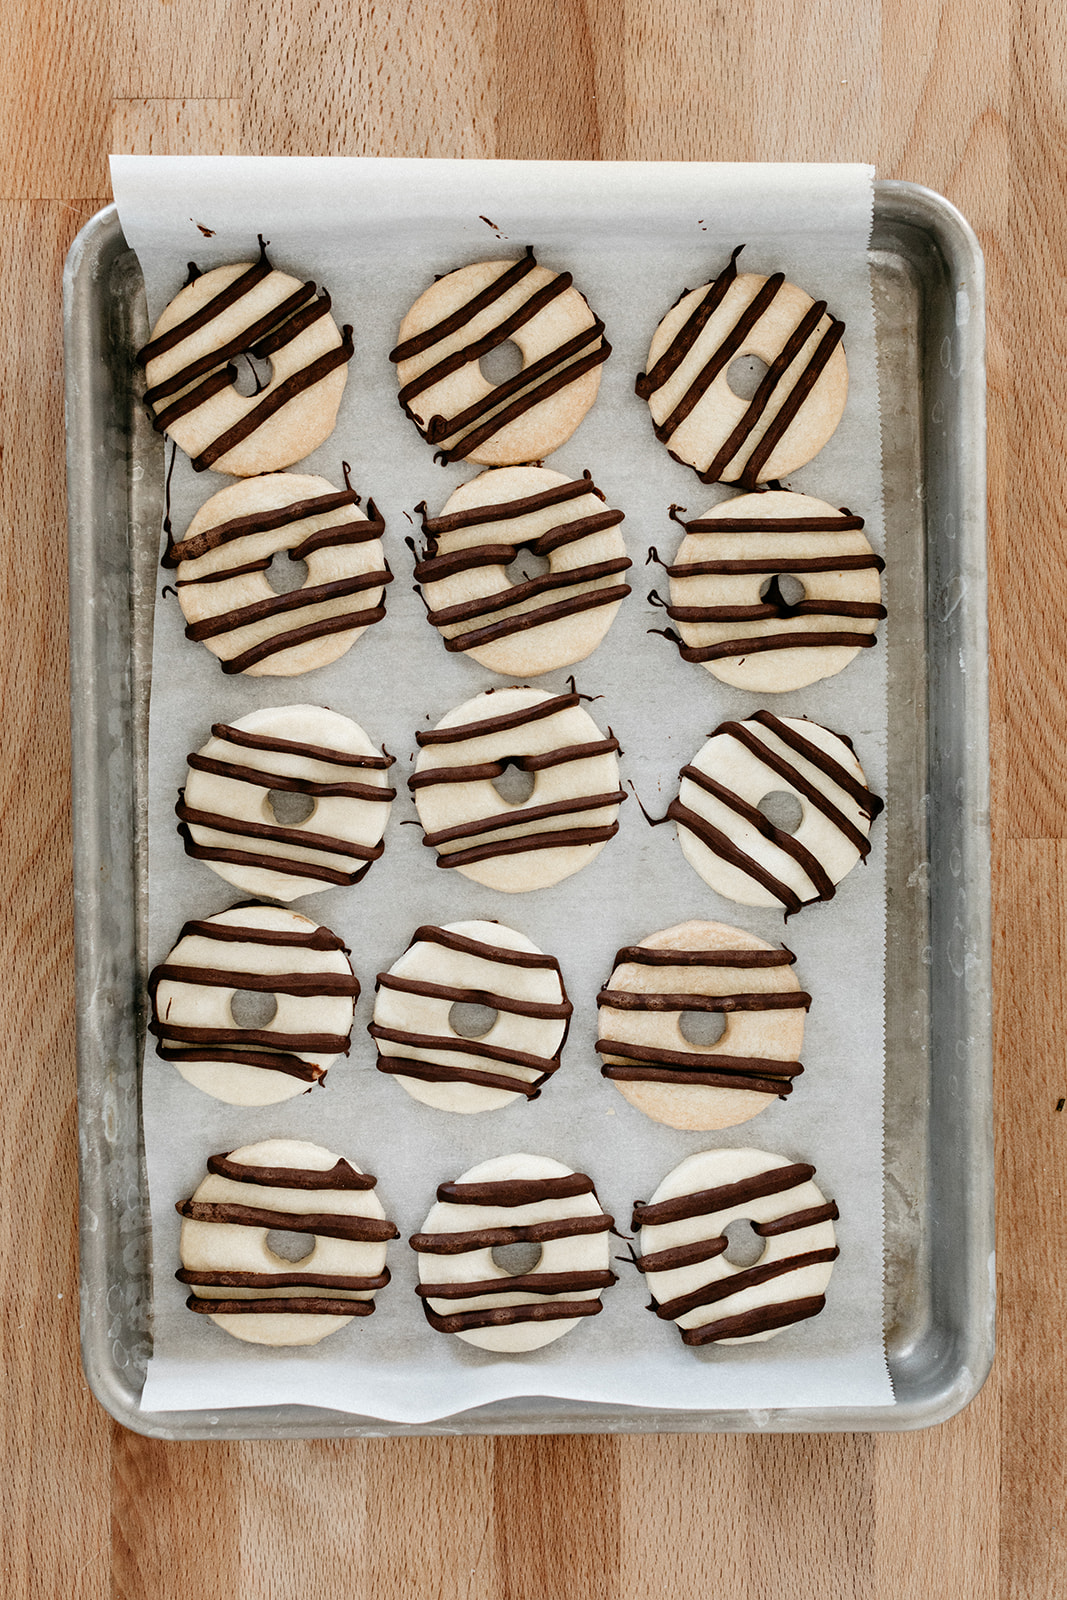 Molly Yeh's homemade fudge stripe cookies